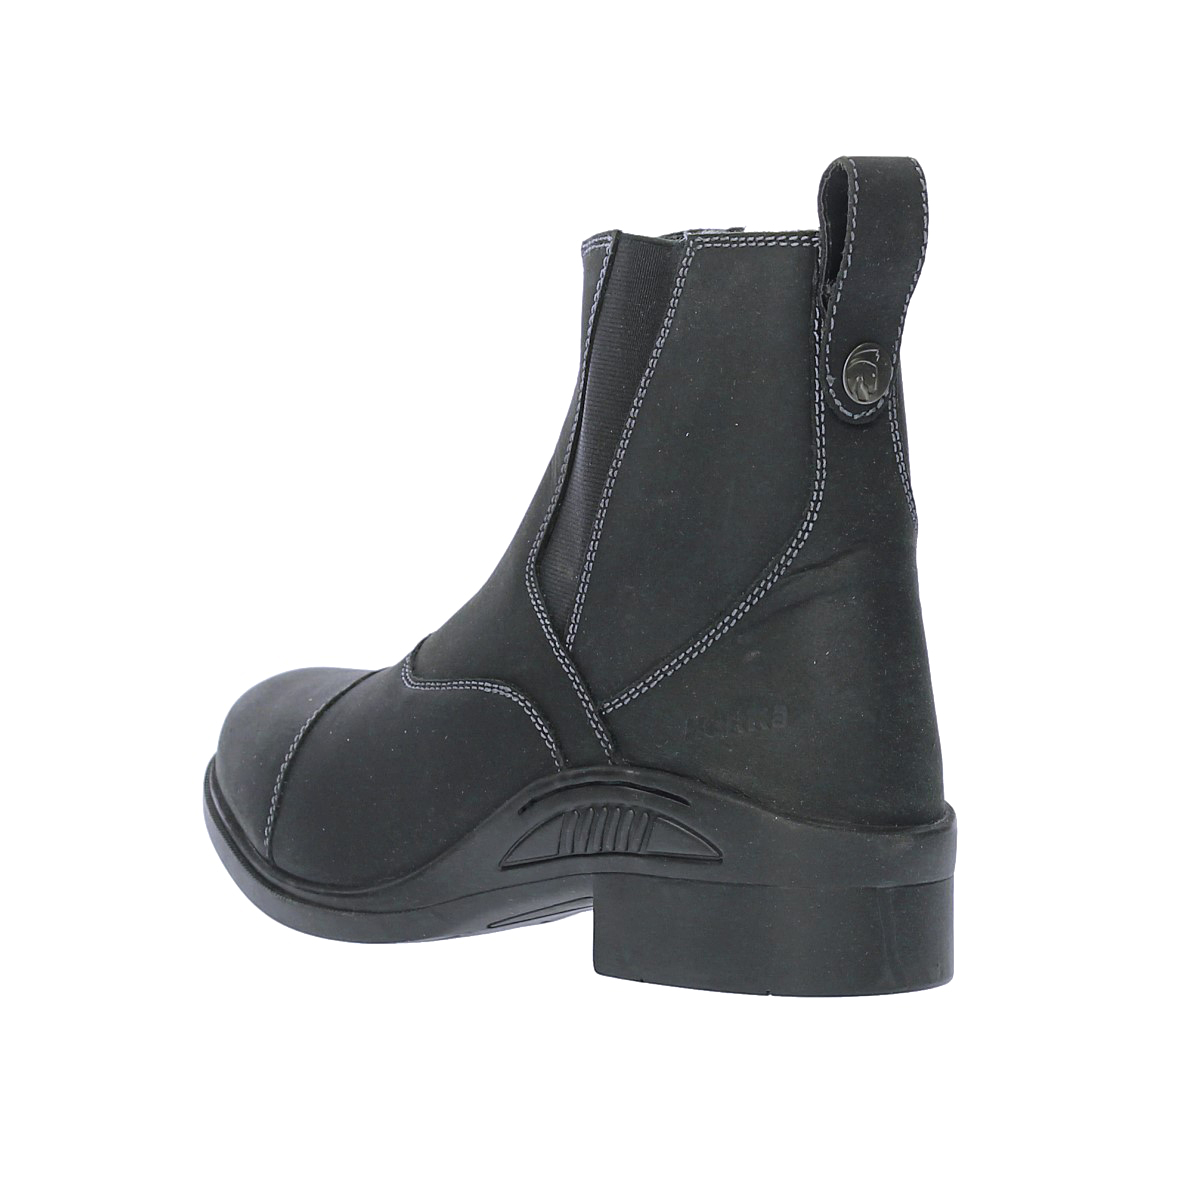 Black NEW All sizes HORKA Basic Leather Jodhpur Short Riding Boots 